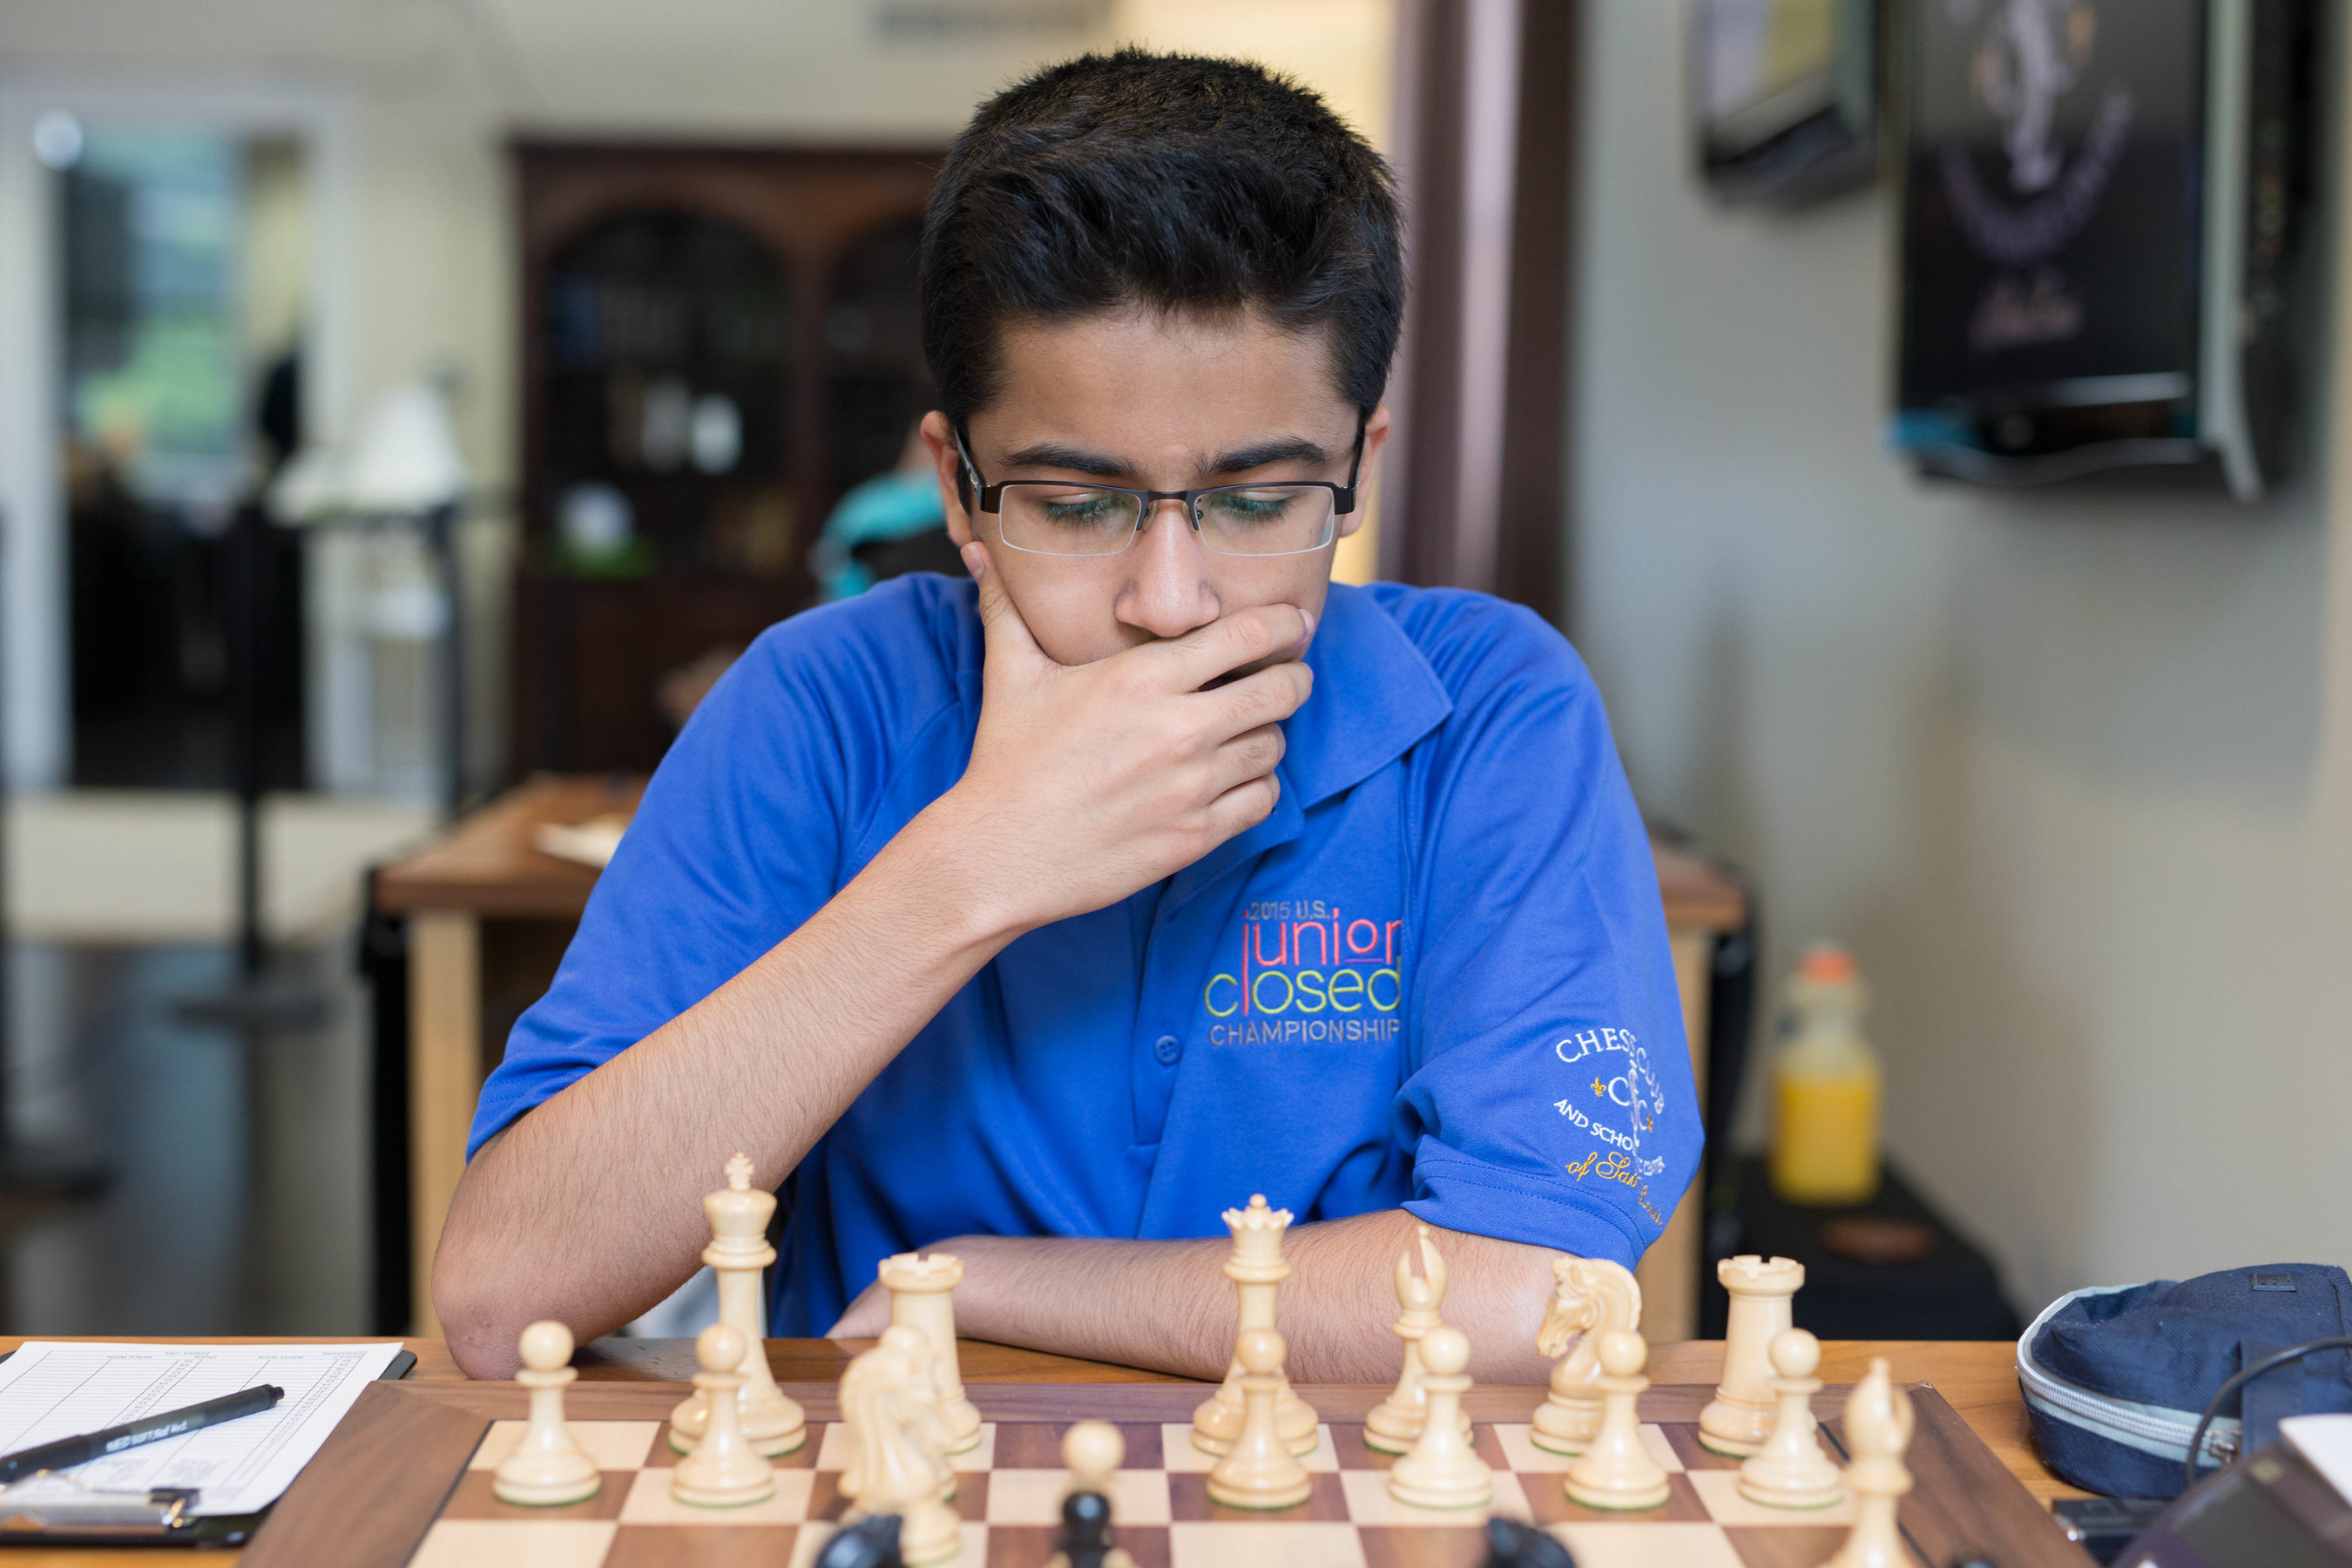 International Master Akshat Chandra Wins Prestigious Junior Closed Championship on July 15, 2015 at the Chess Club and Scholastic Center of Saint Louis.